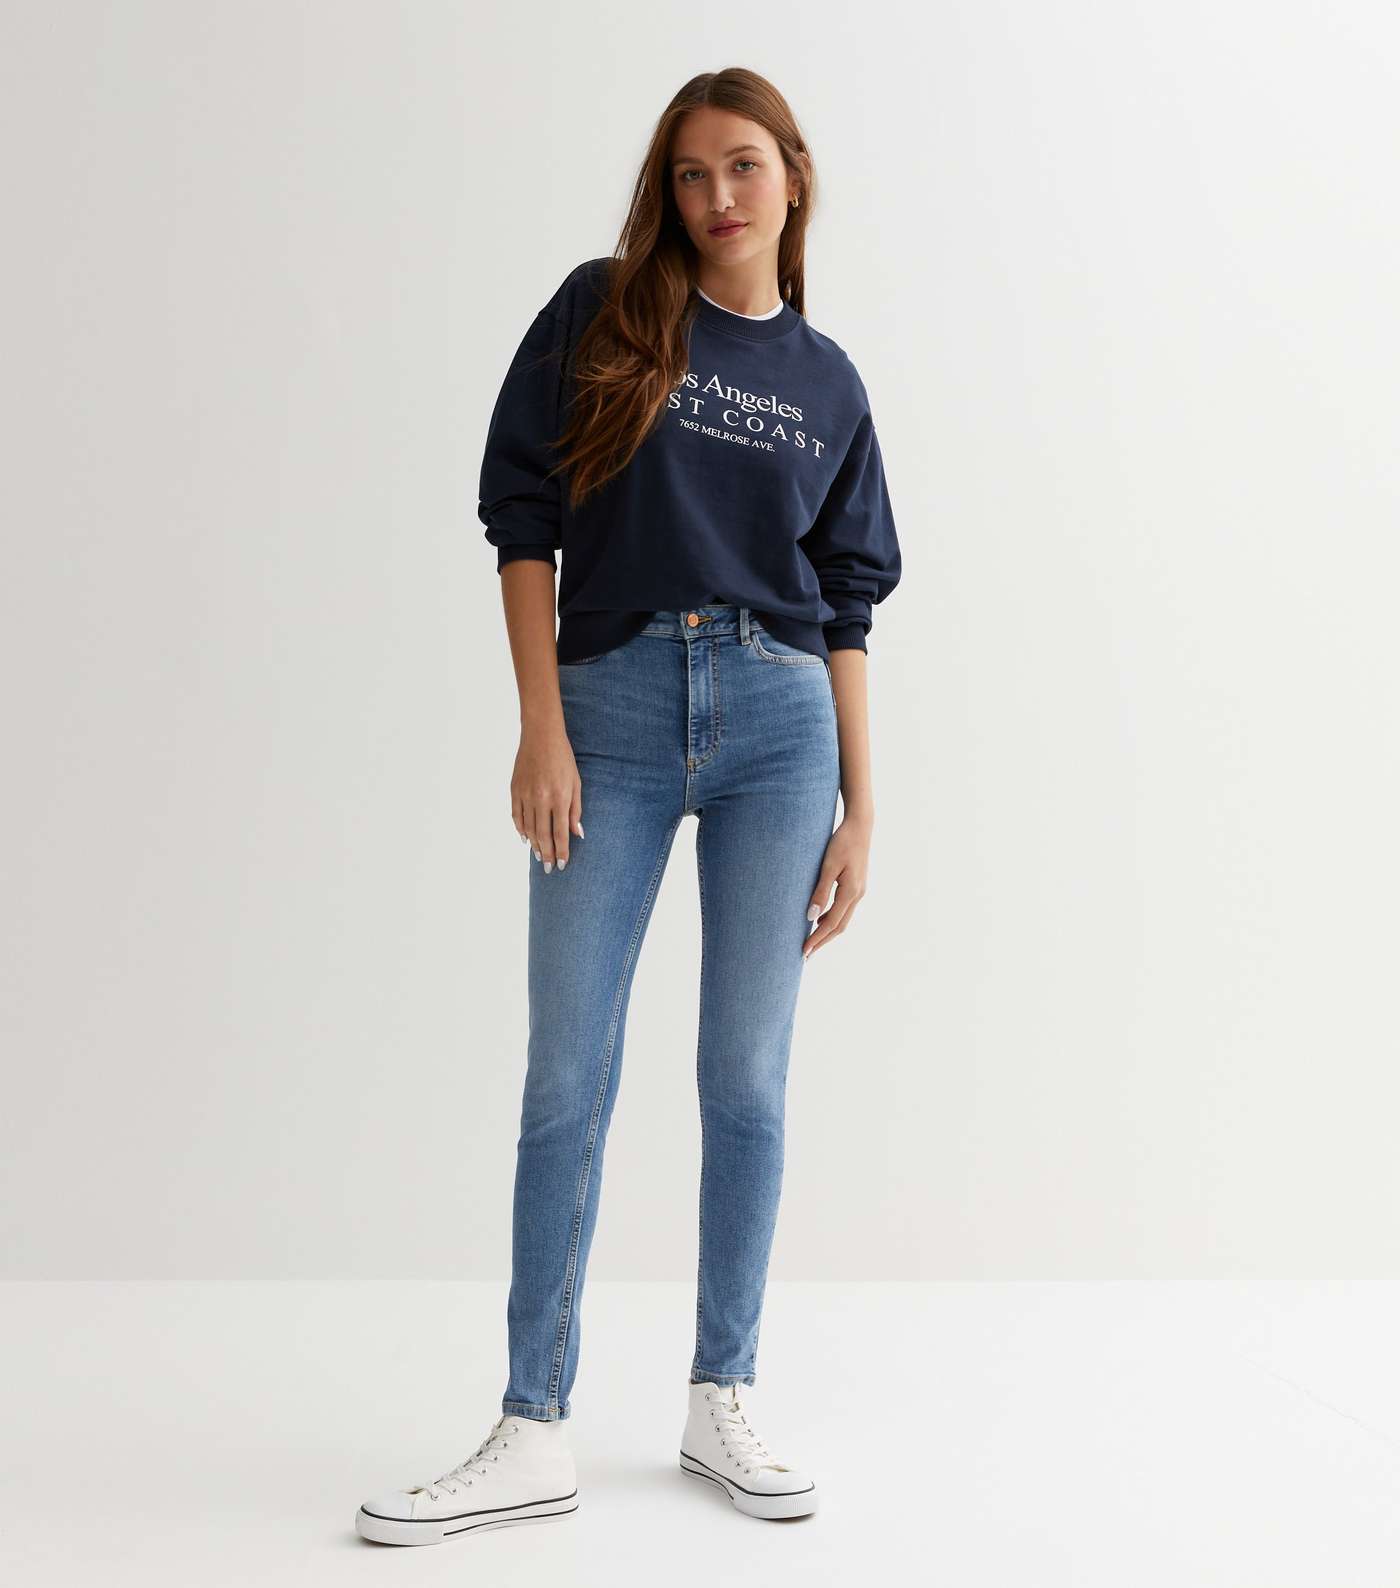 Blue Lift & Shape Jenna Skinny Jeans